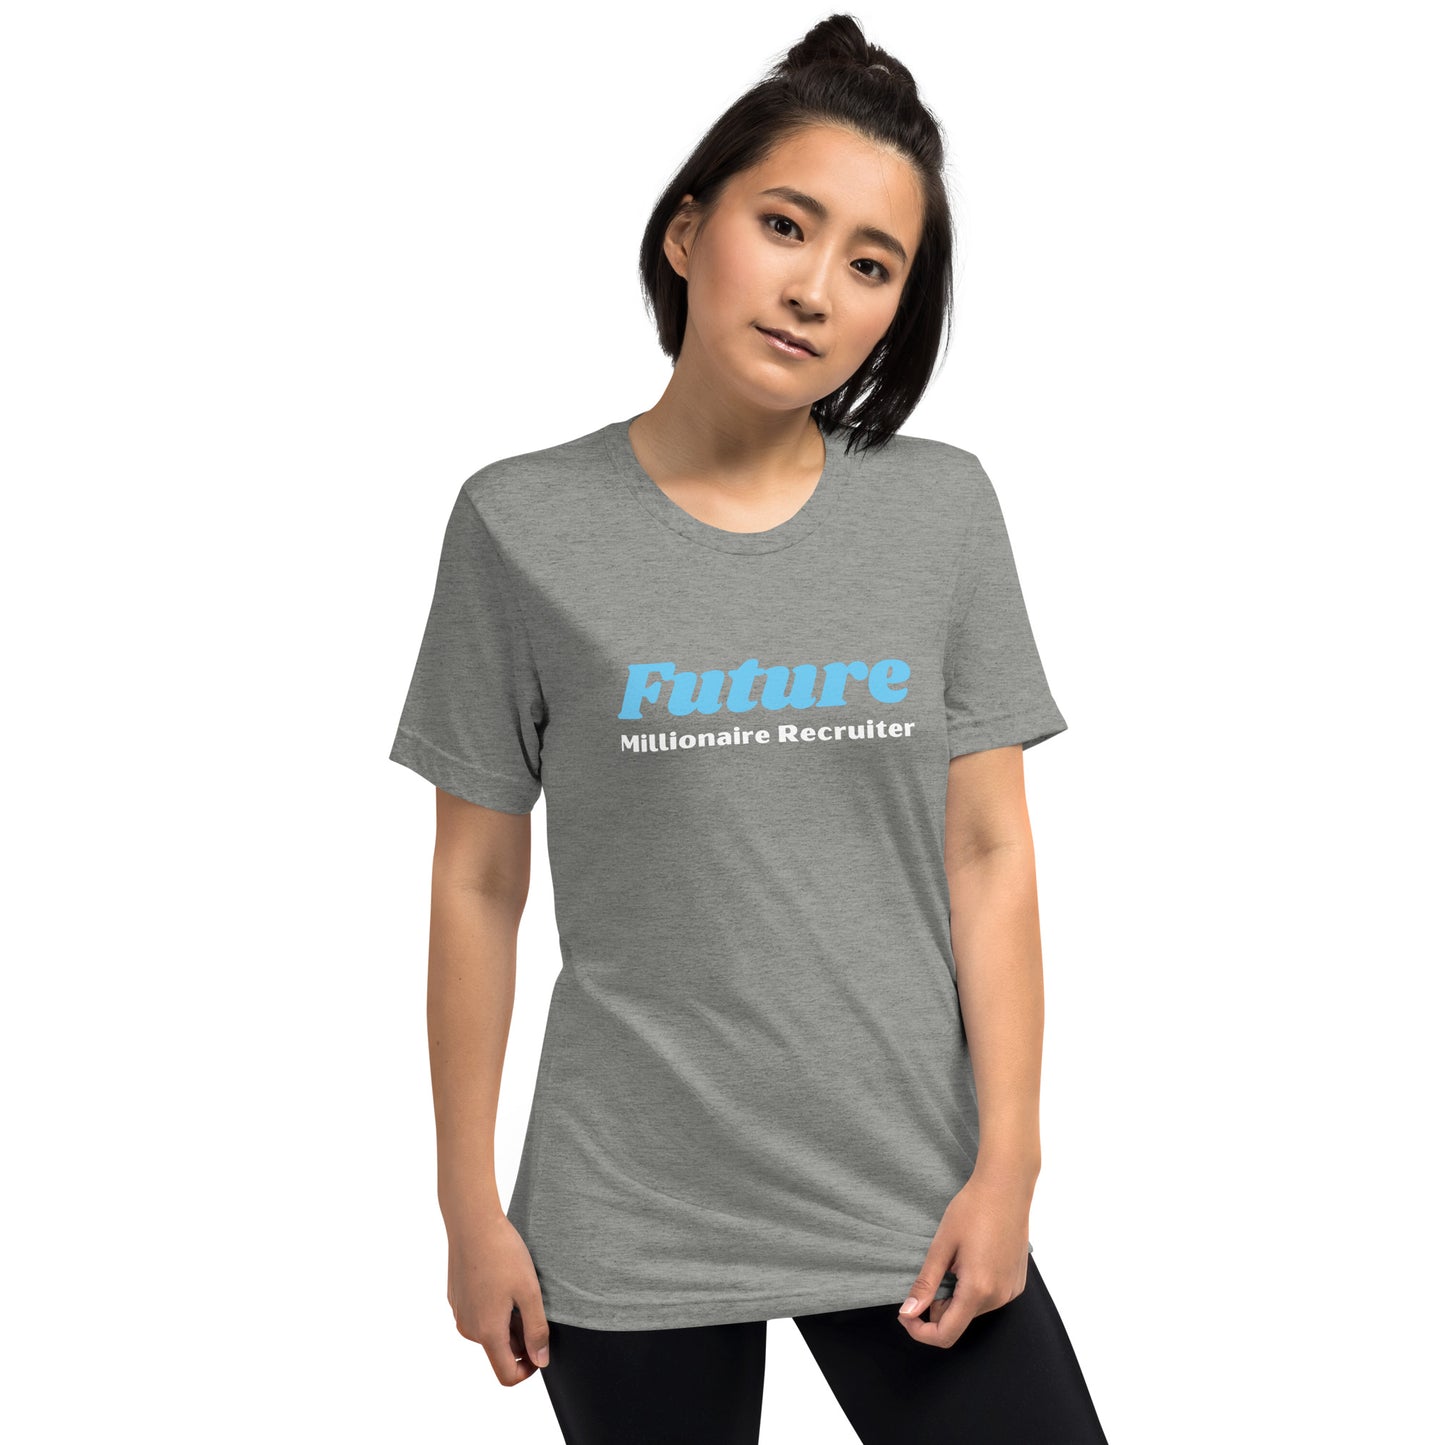 Future Millionaire Recruiter Short Sleeve T-shirt